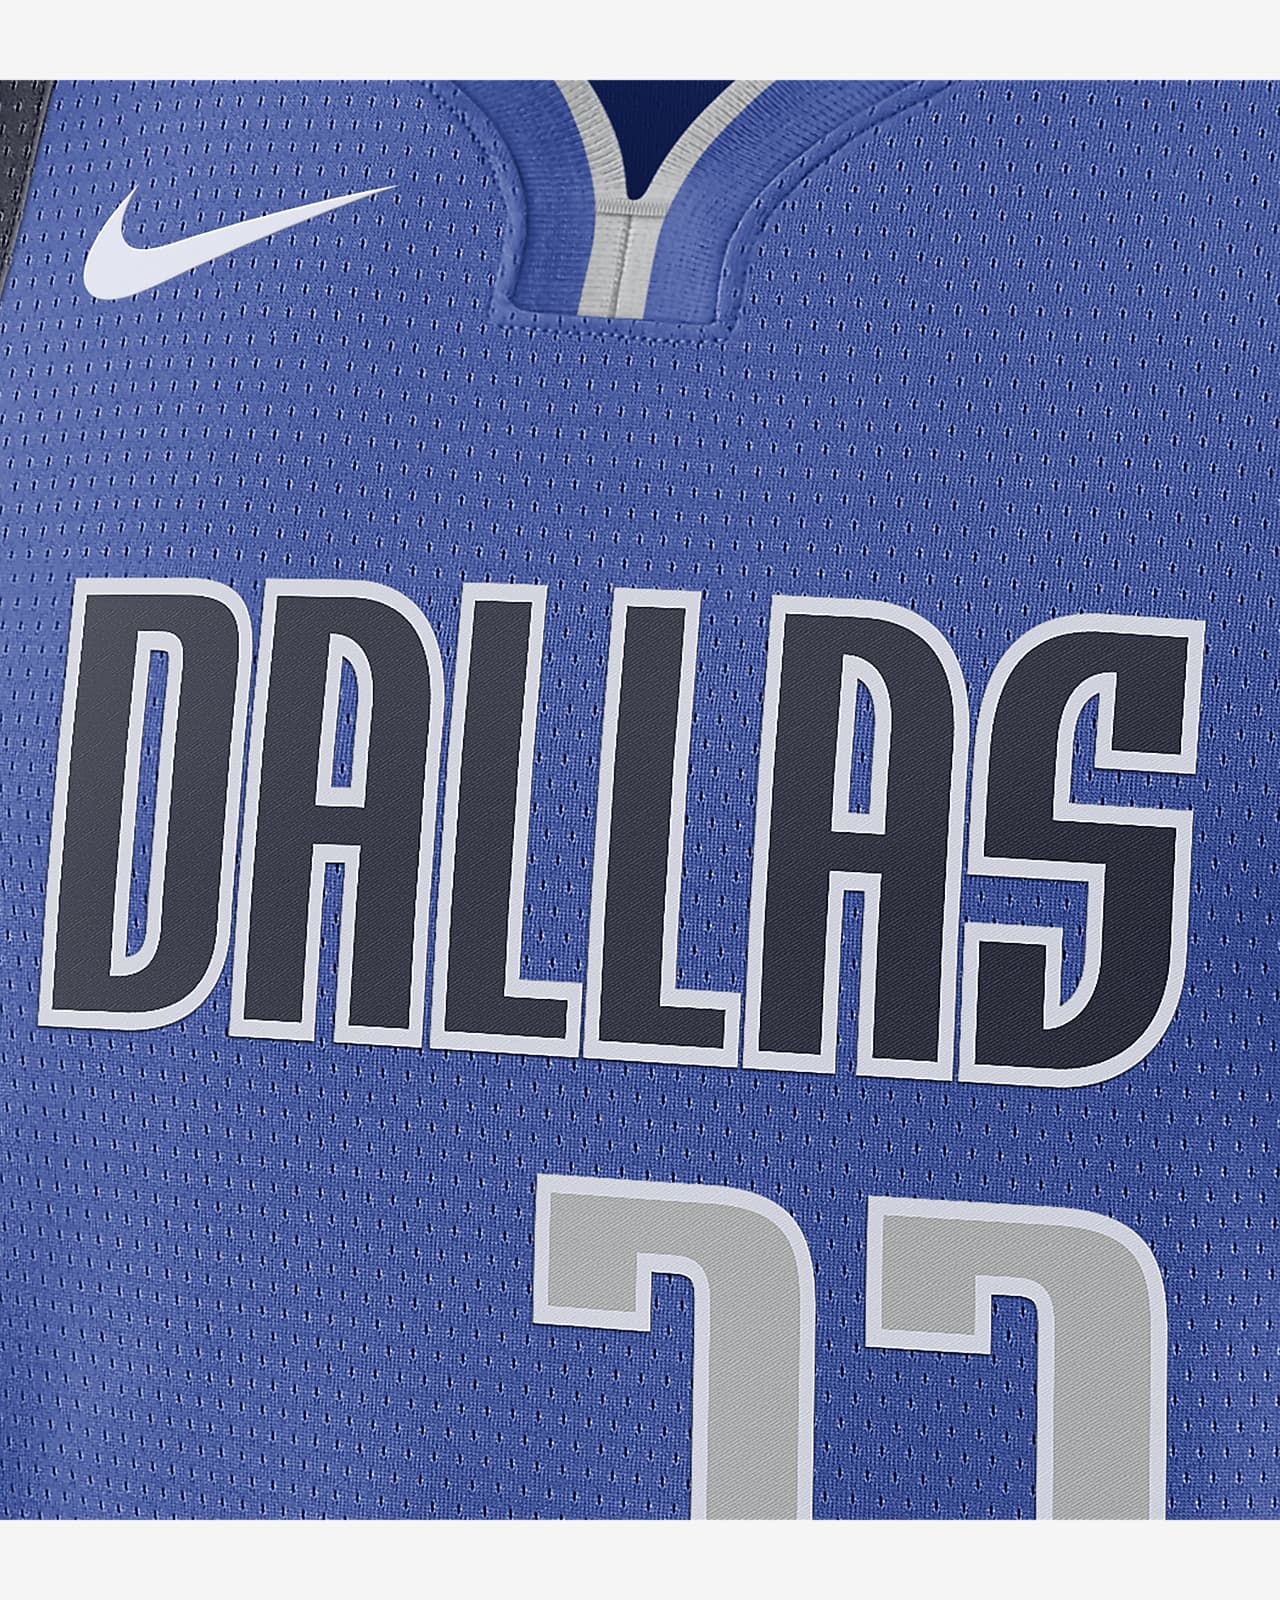 Punto prisa Melancólico Dallas Mavericks Icon Edition 2022/23 Camiseta Nike Dri-FIT NBA Swingman.  Nike ES